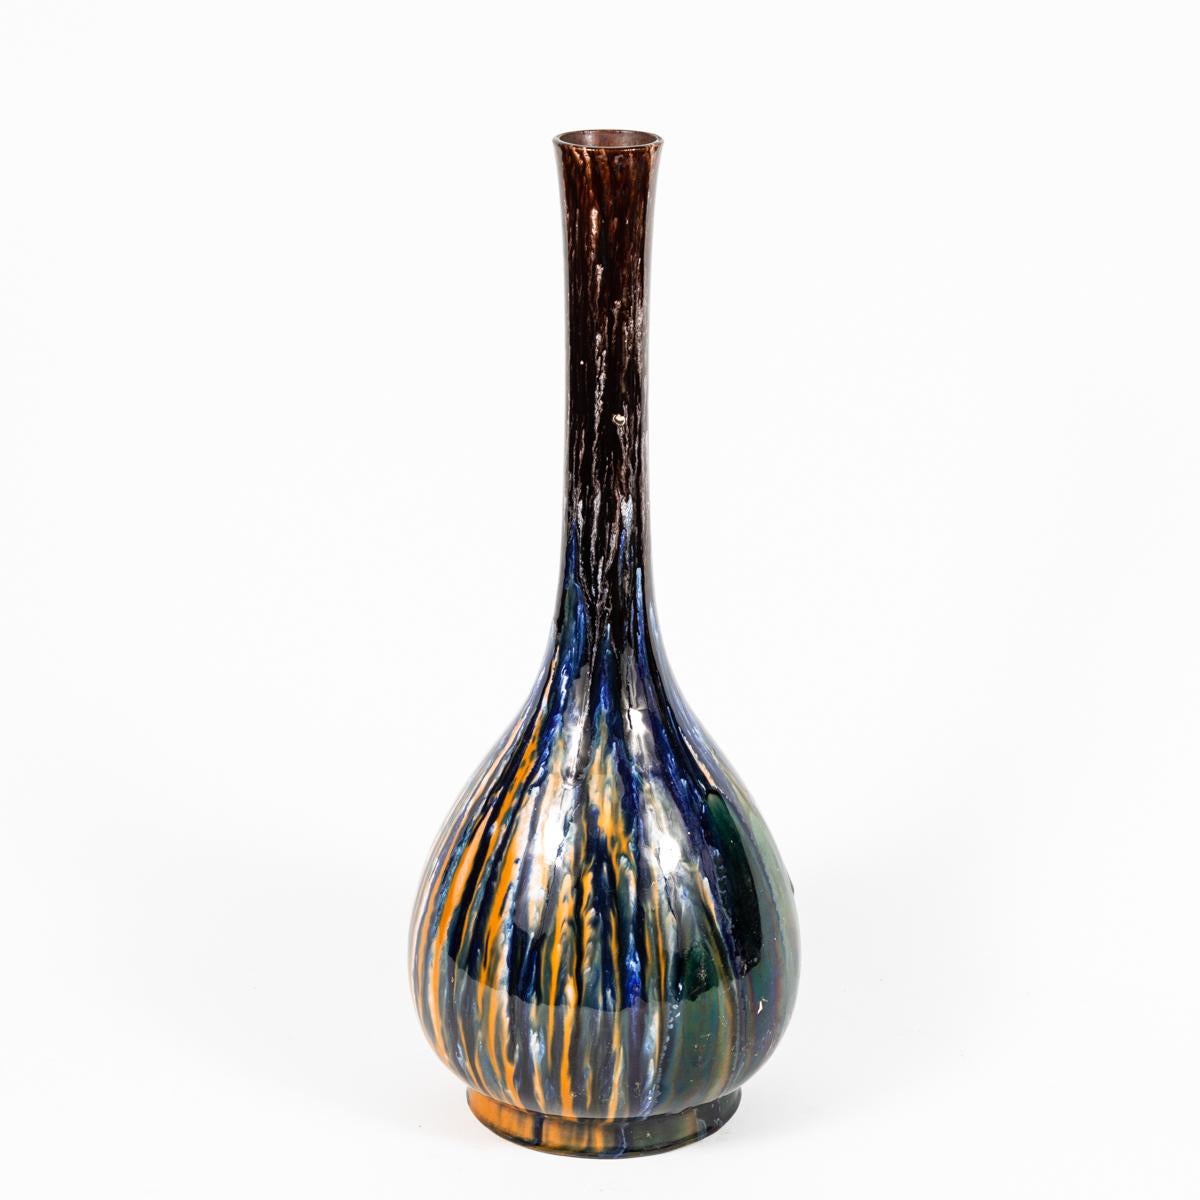 A glazed blue vase.